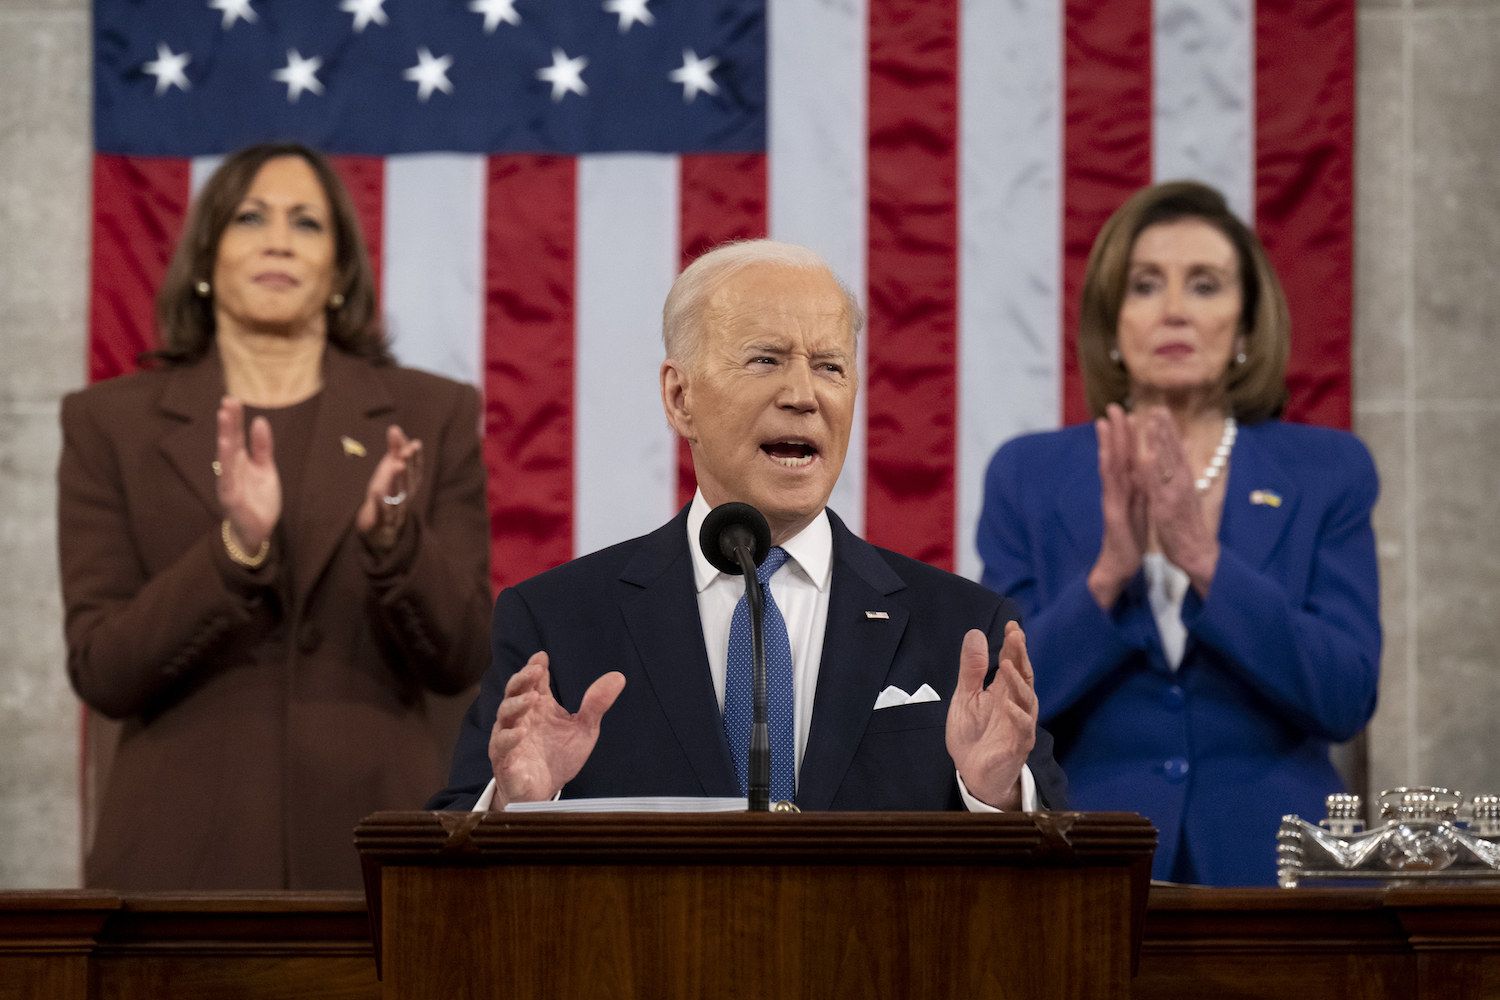 Fact-checking Joe Biden's State of the Union address